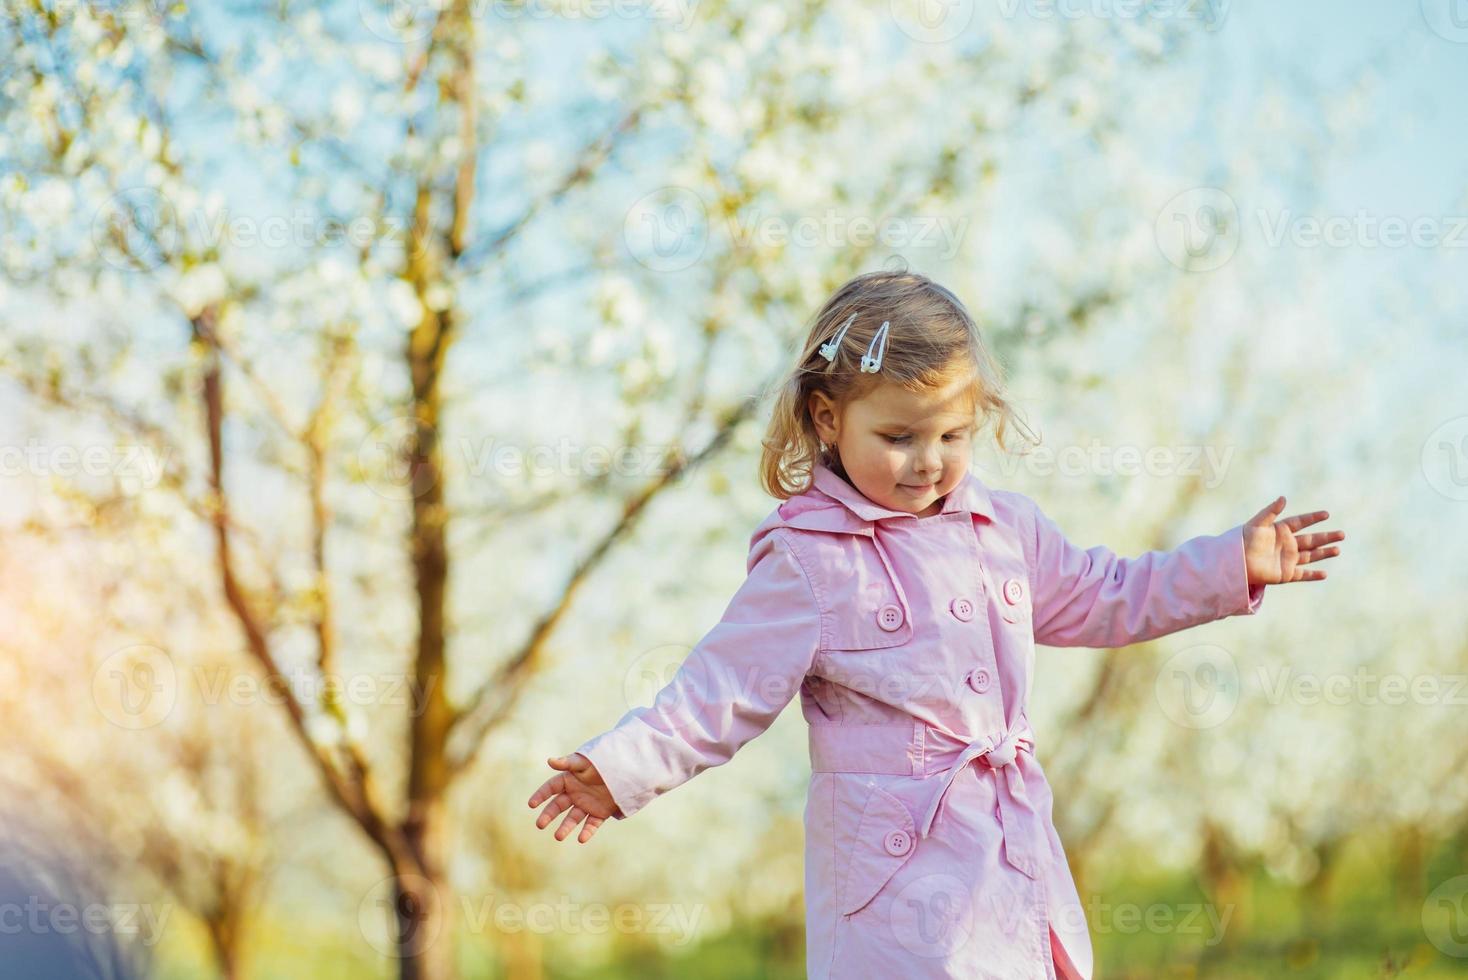 klein meisje van 3 jaar, dat tussen bloeiende bomen loopt outd foto